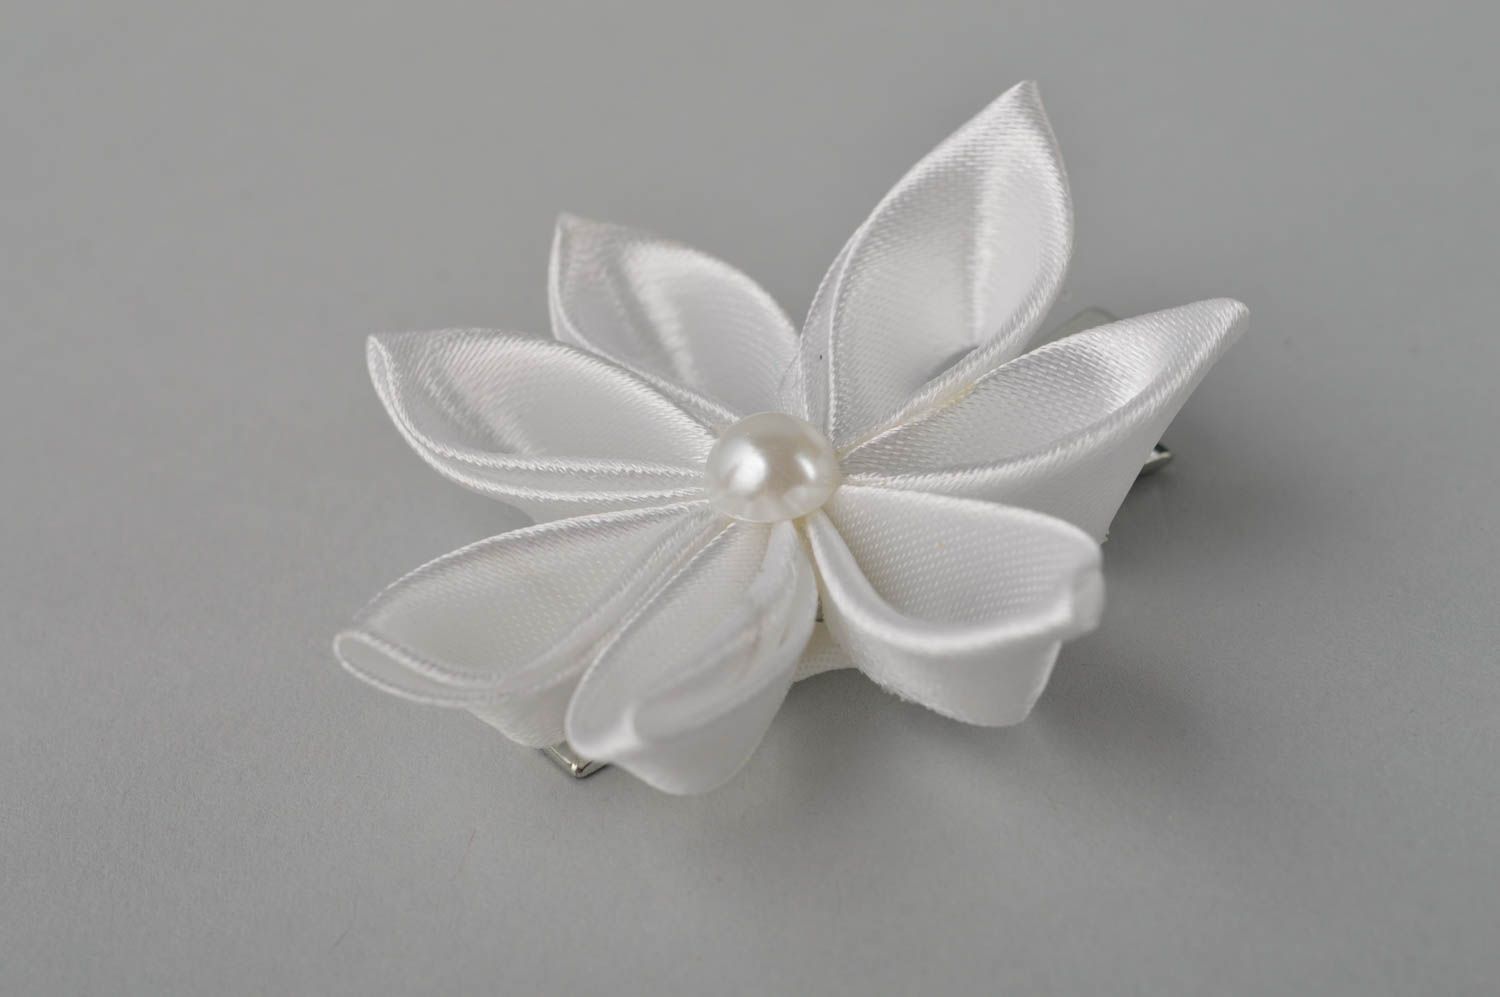 Stylish handmade textile barrette homemade hair clip flowers in hair gift ideas photo 2